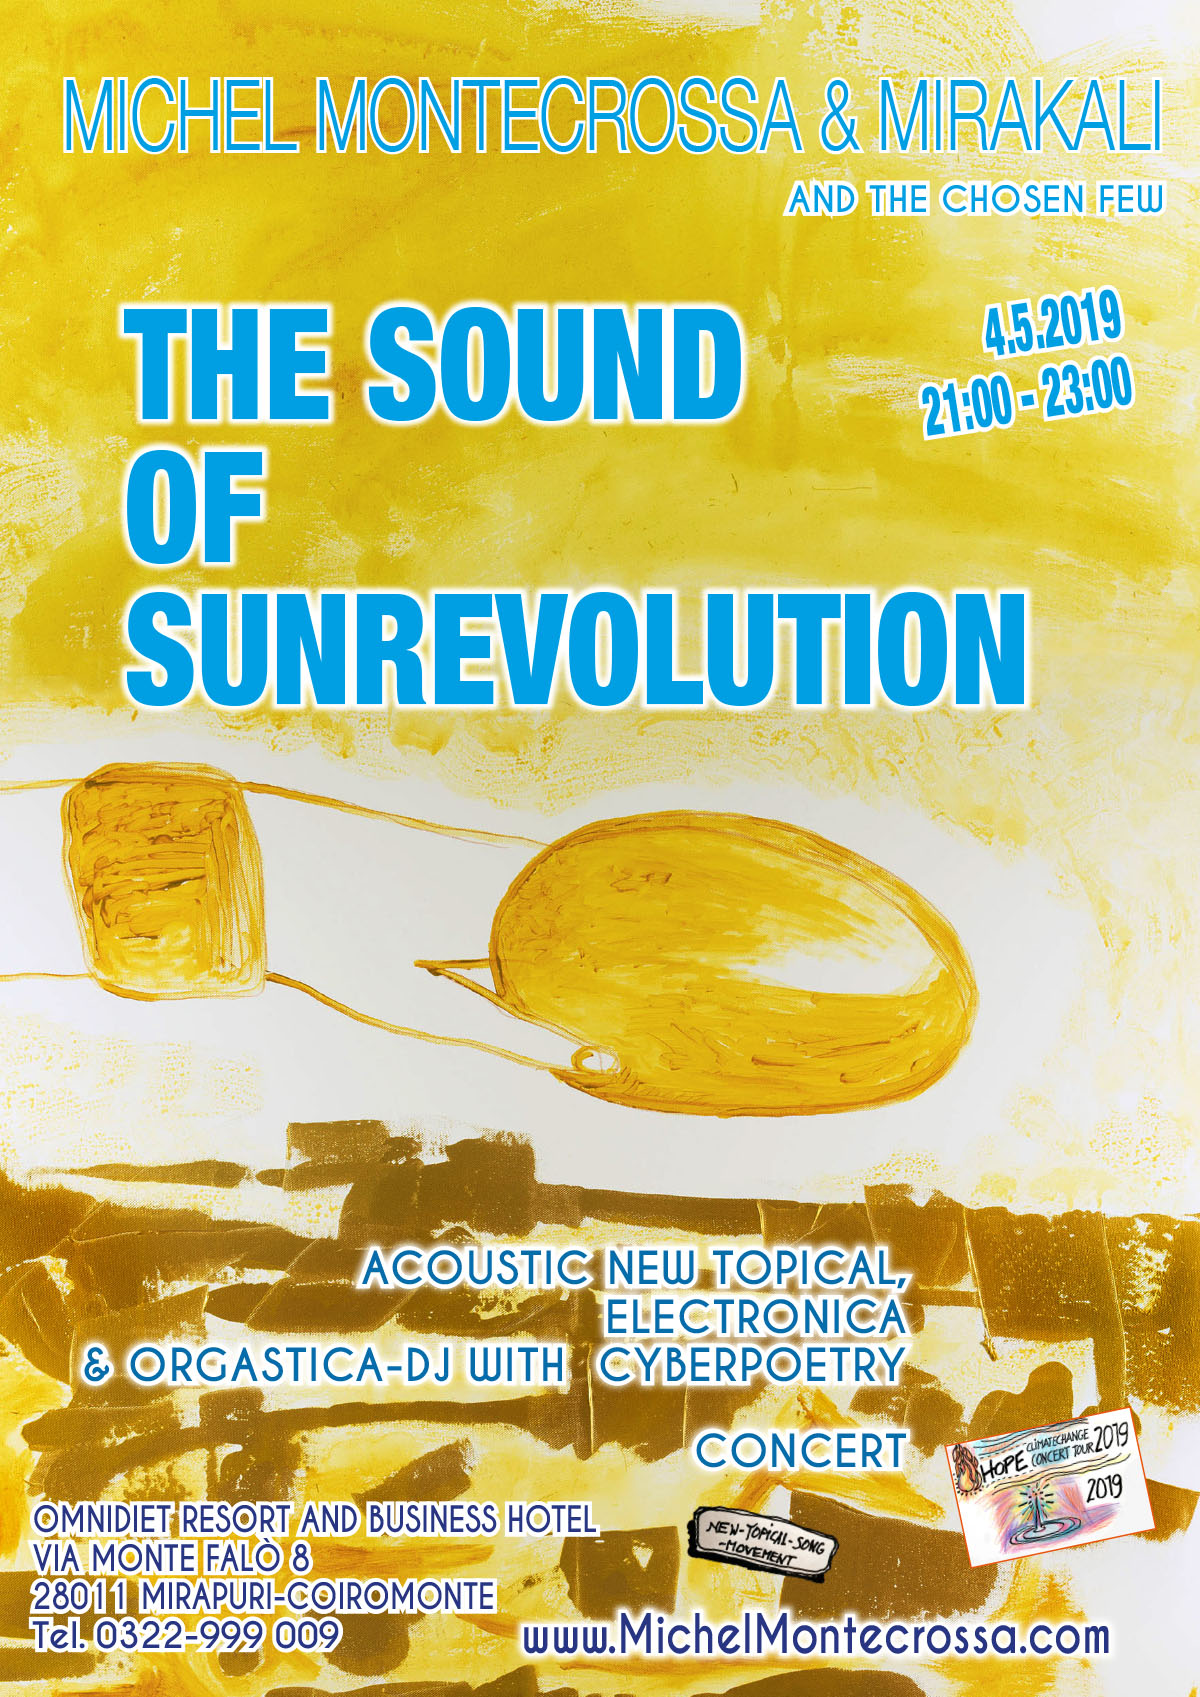 The Sound Of Sunrevolution Concert